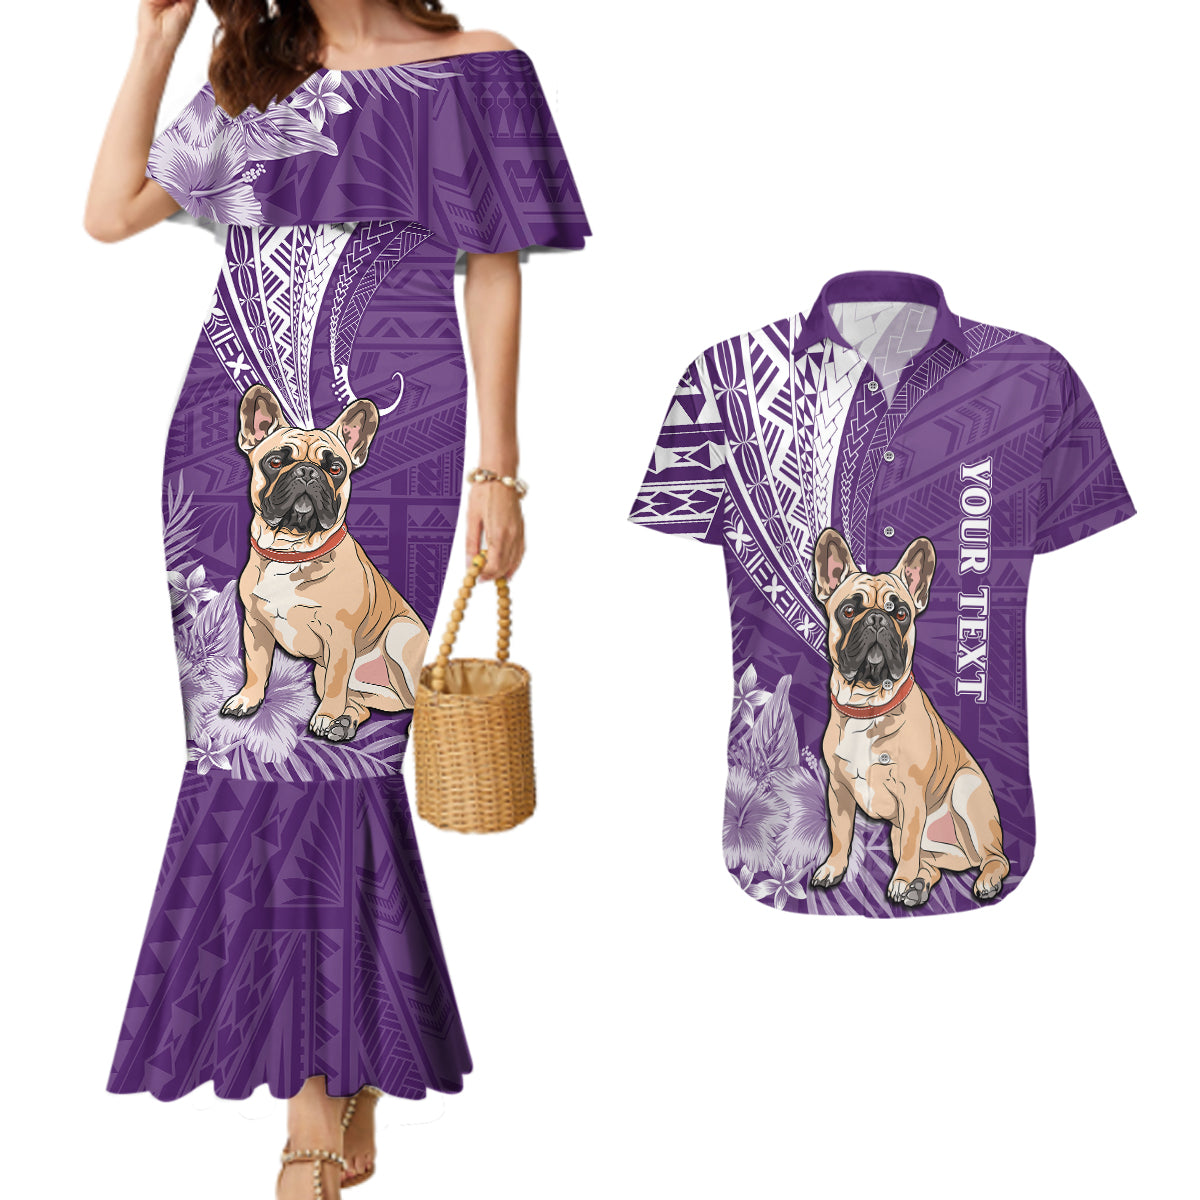 Personalised Polynesian Pacific Bulldog Couples Matching Mermaid Dress And Hawaiian Shirt With Violet Hawaii Tribal Tattoo Patterns LT7 Purple - Polynesian Pride